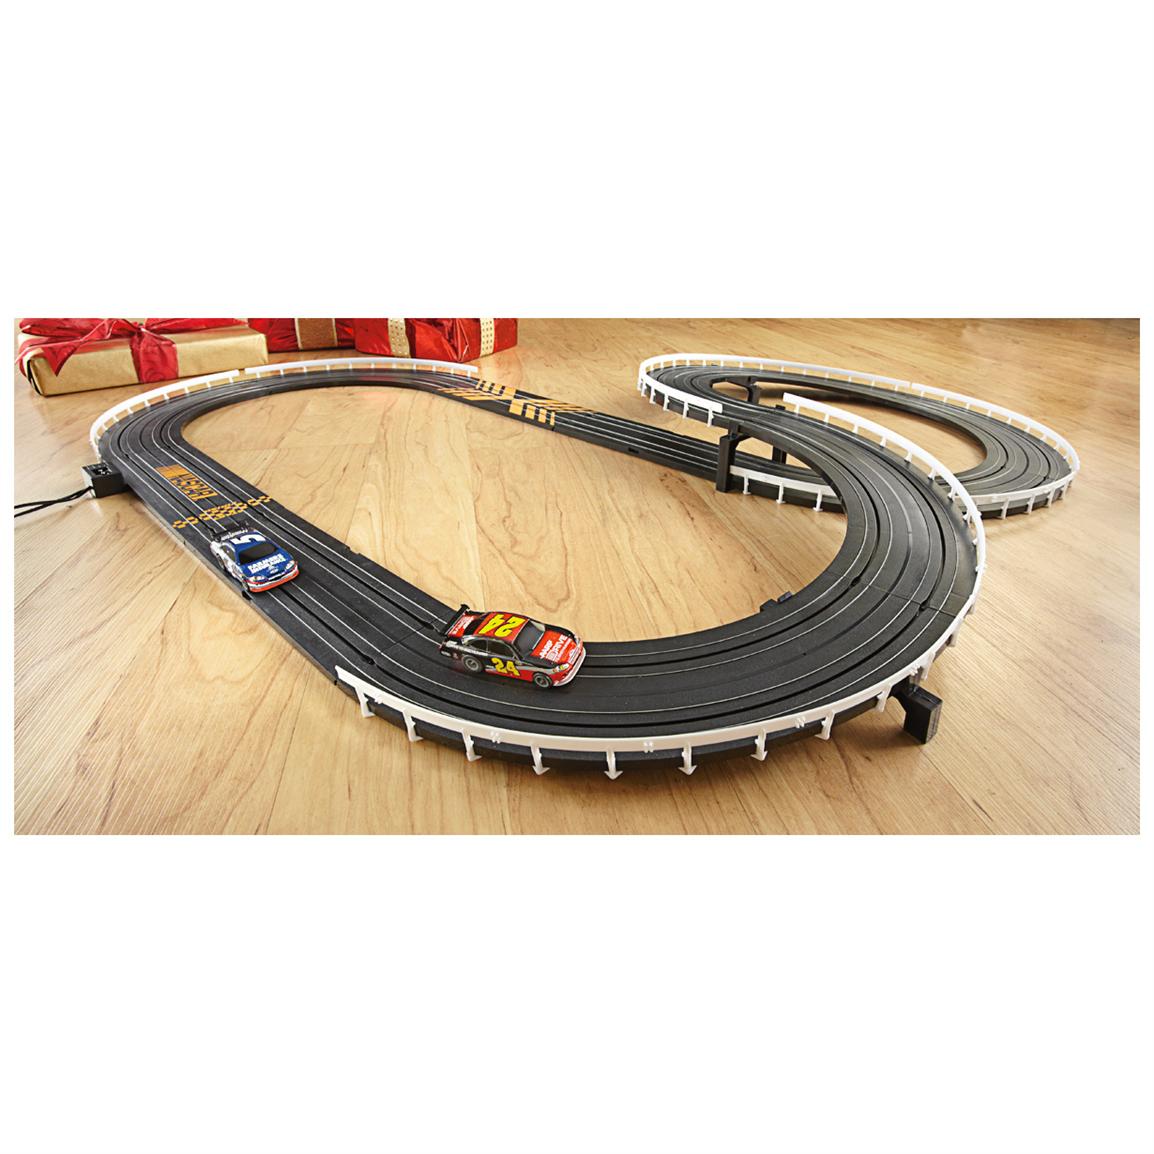 Racetracks Toys 115